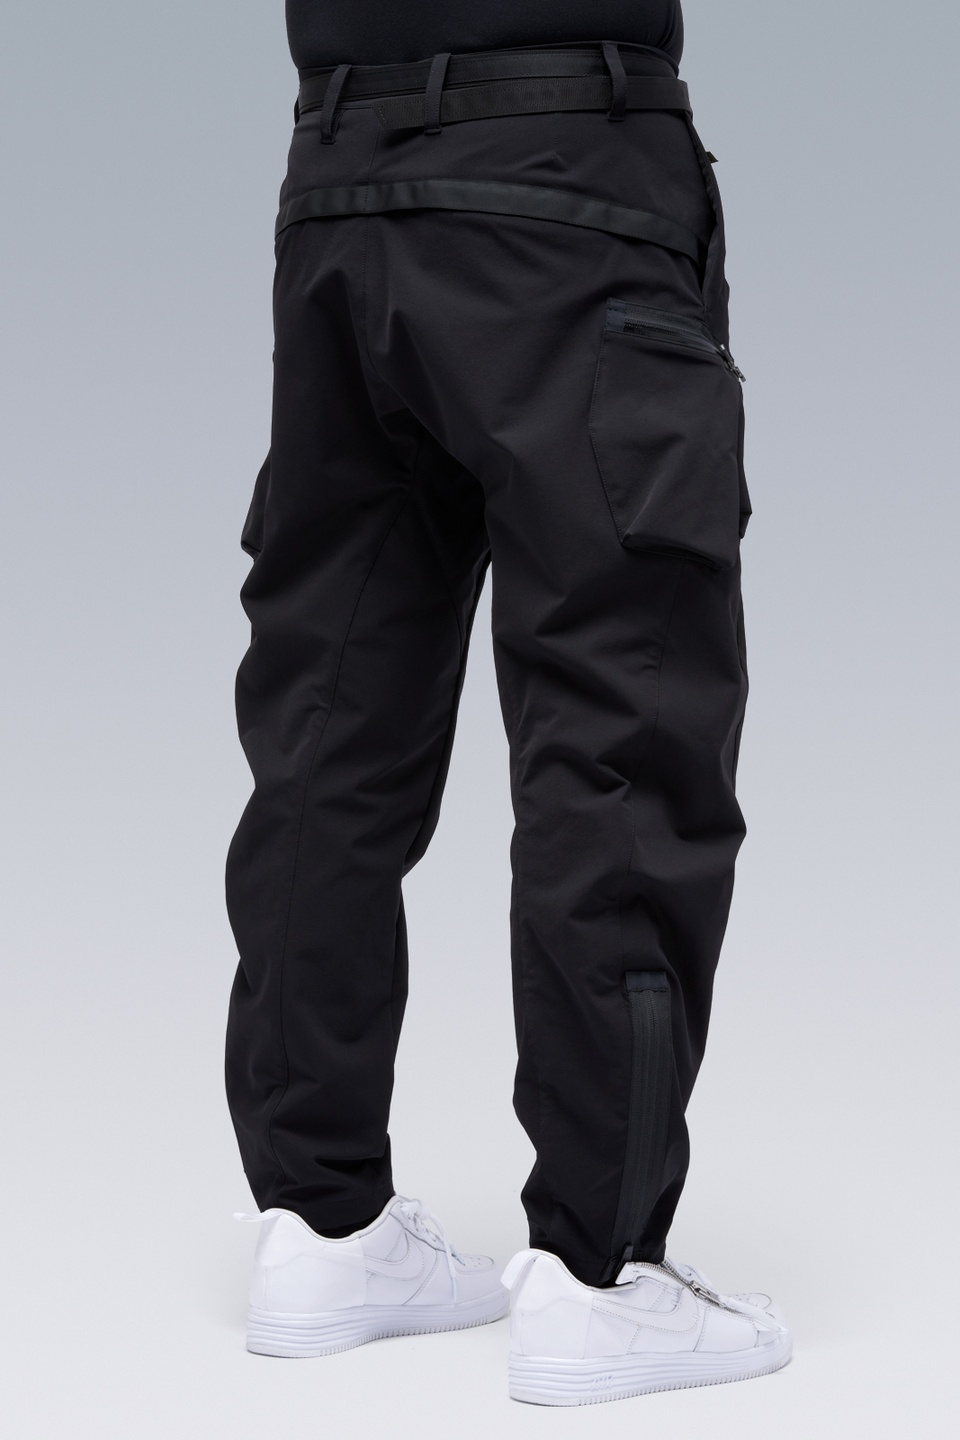 ACRONYM P41-DS schoeller® Dryskin™ Articulated Cargo Trouser Black